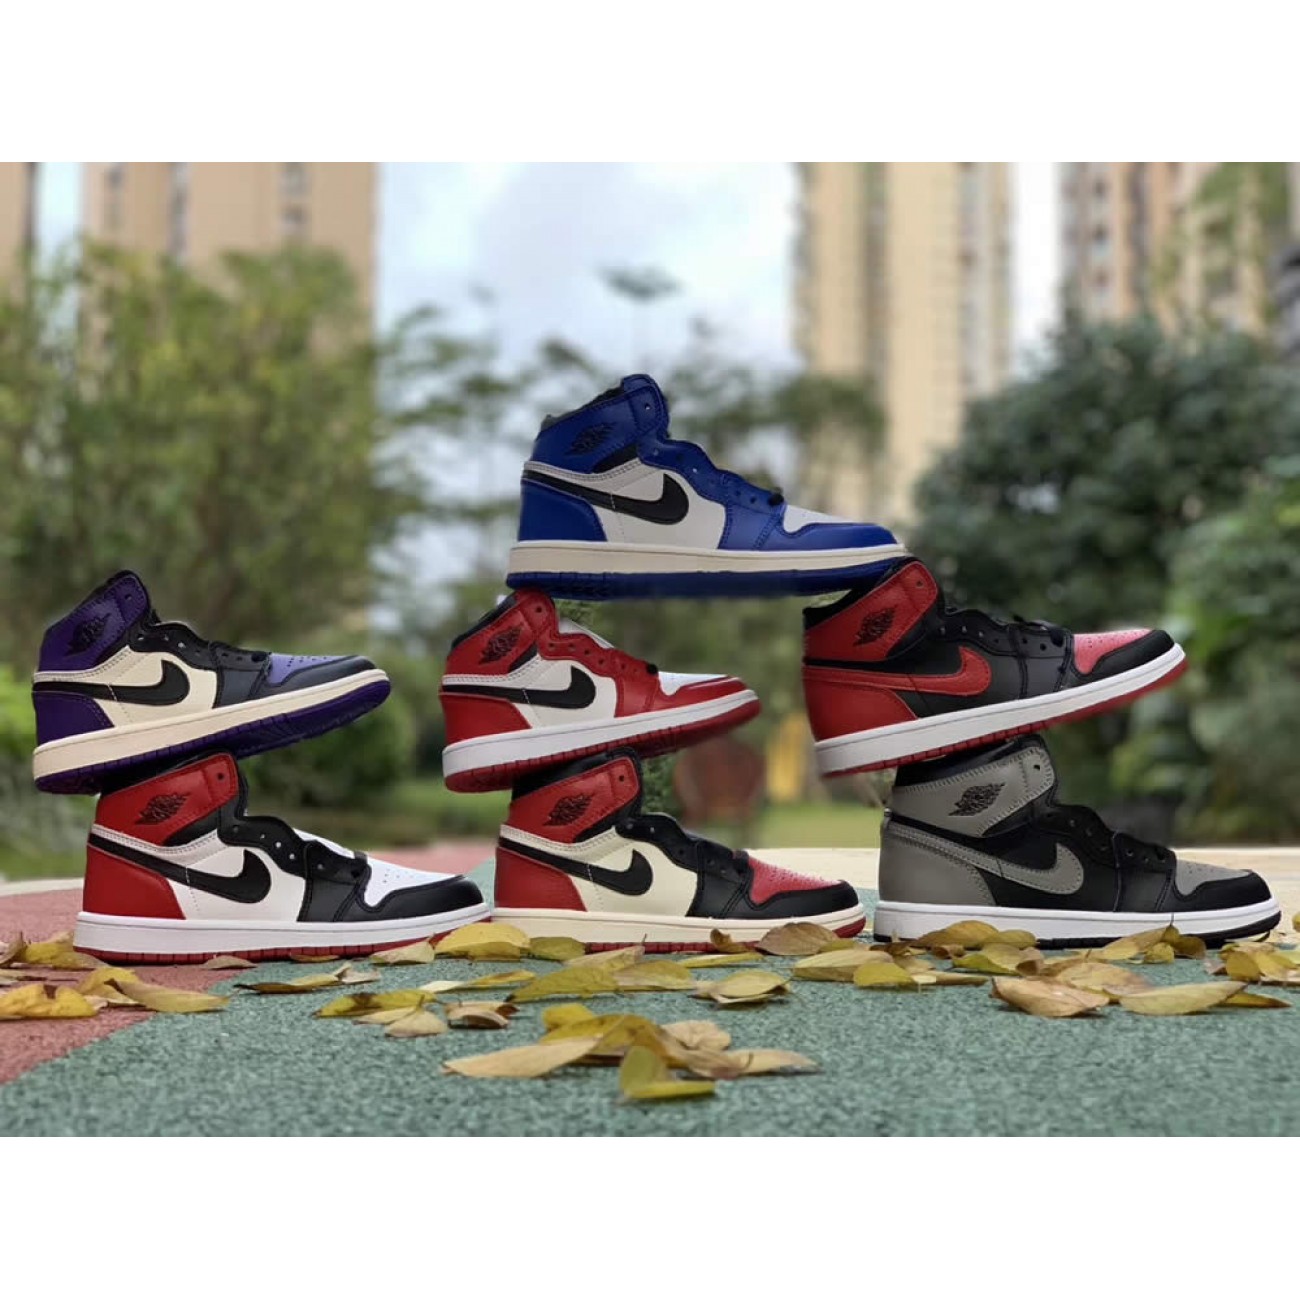 Kid Air Jordans Shoes Jordan 1 Sneakers Kids Sizes For Sale